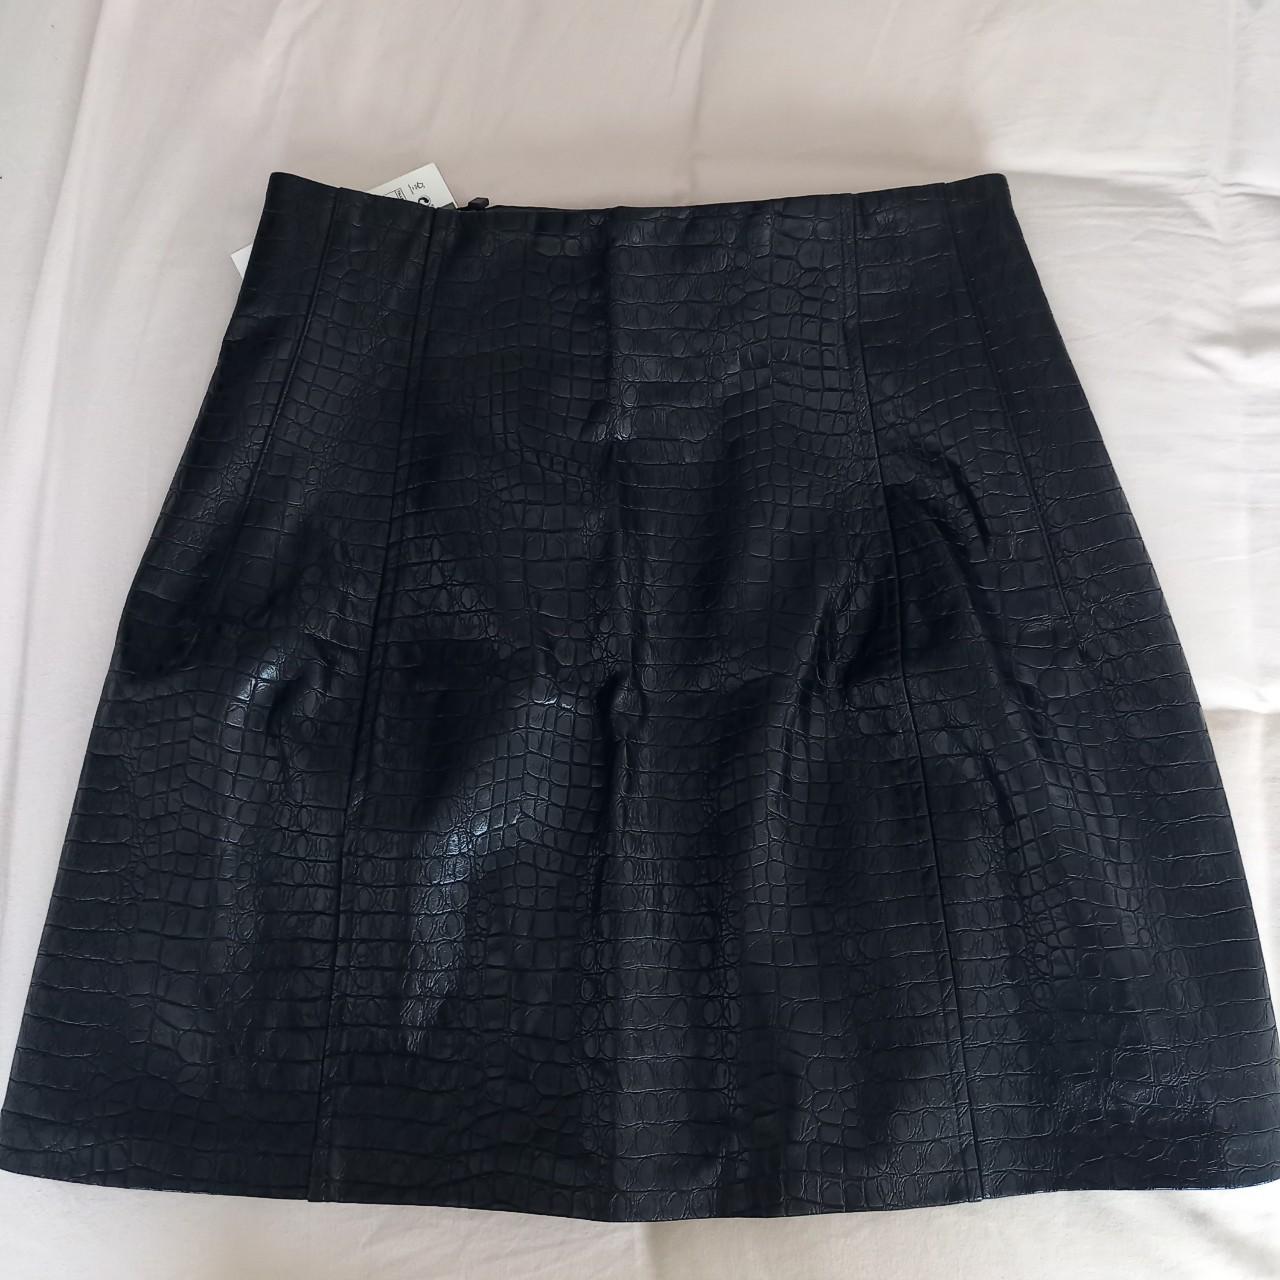 Zara black faux leather mini skirt in size M. Never... - Depop